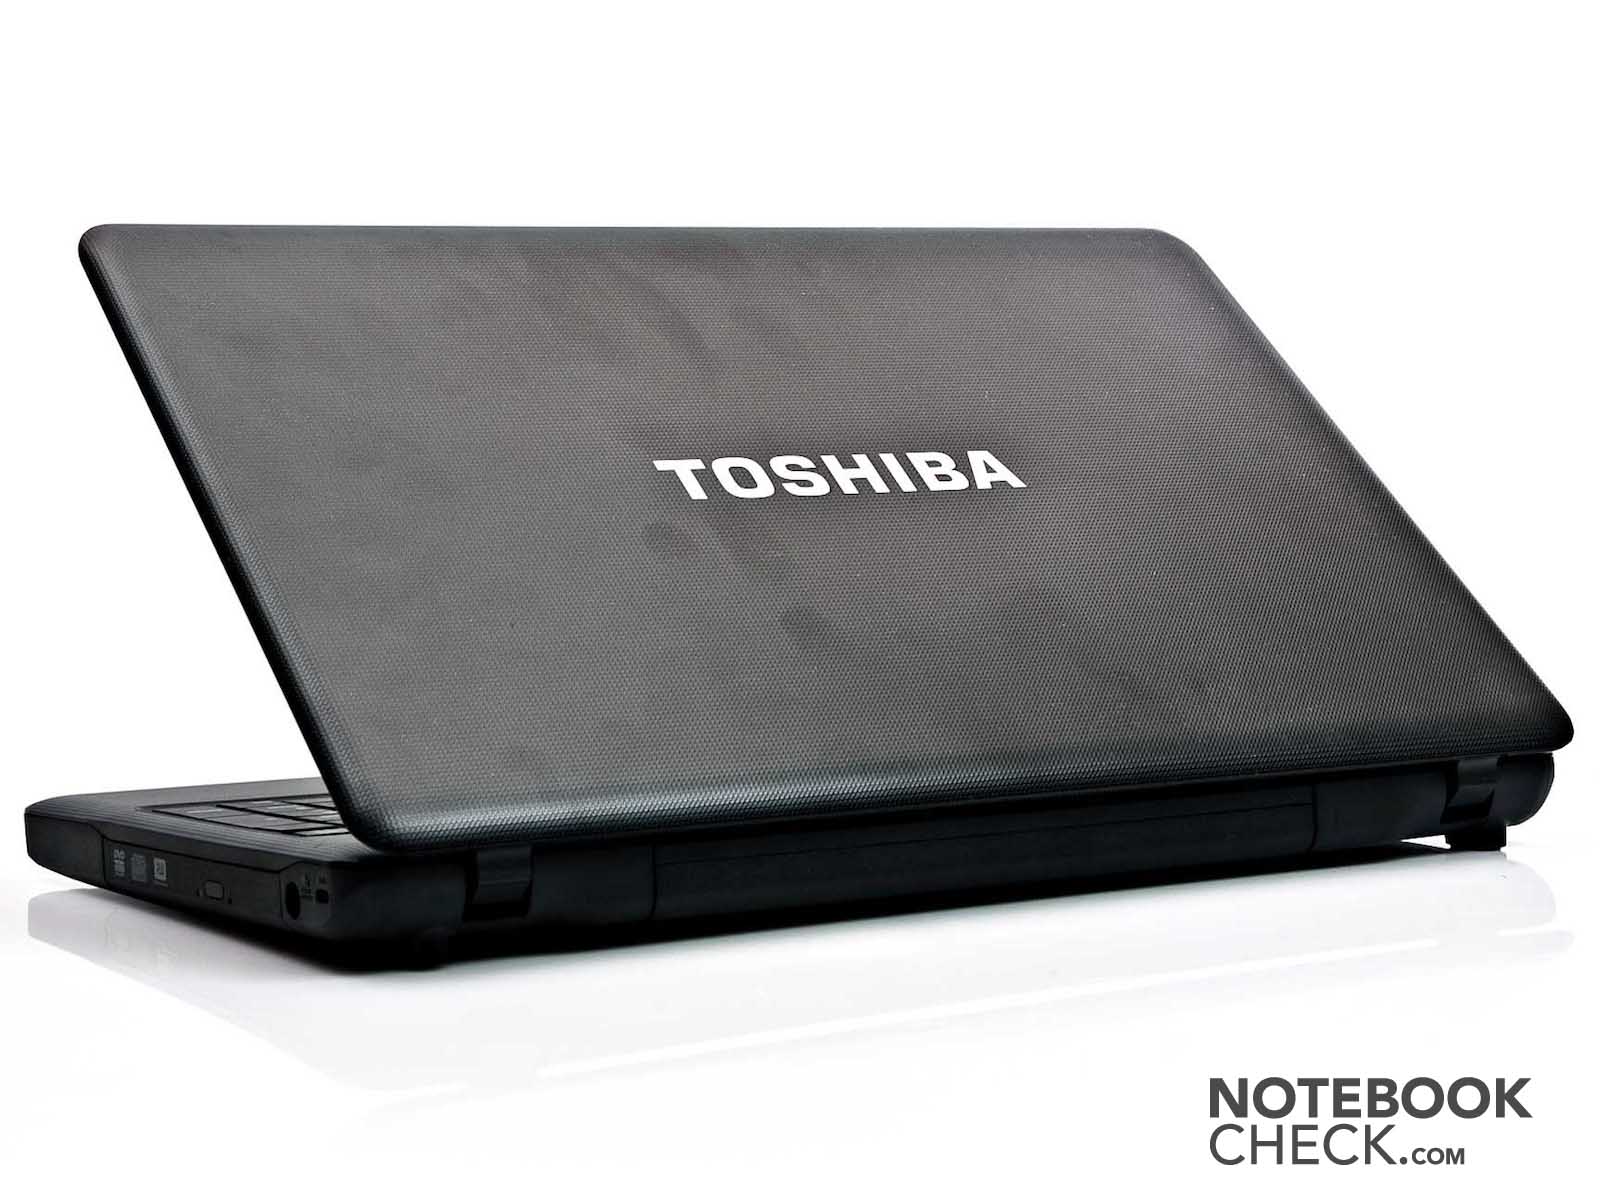 Toshiba Satellite C640 Lan Driver Download For Win7